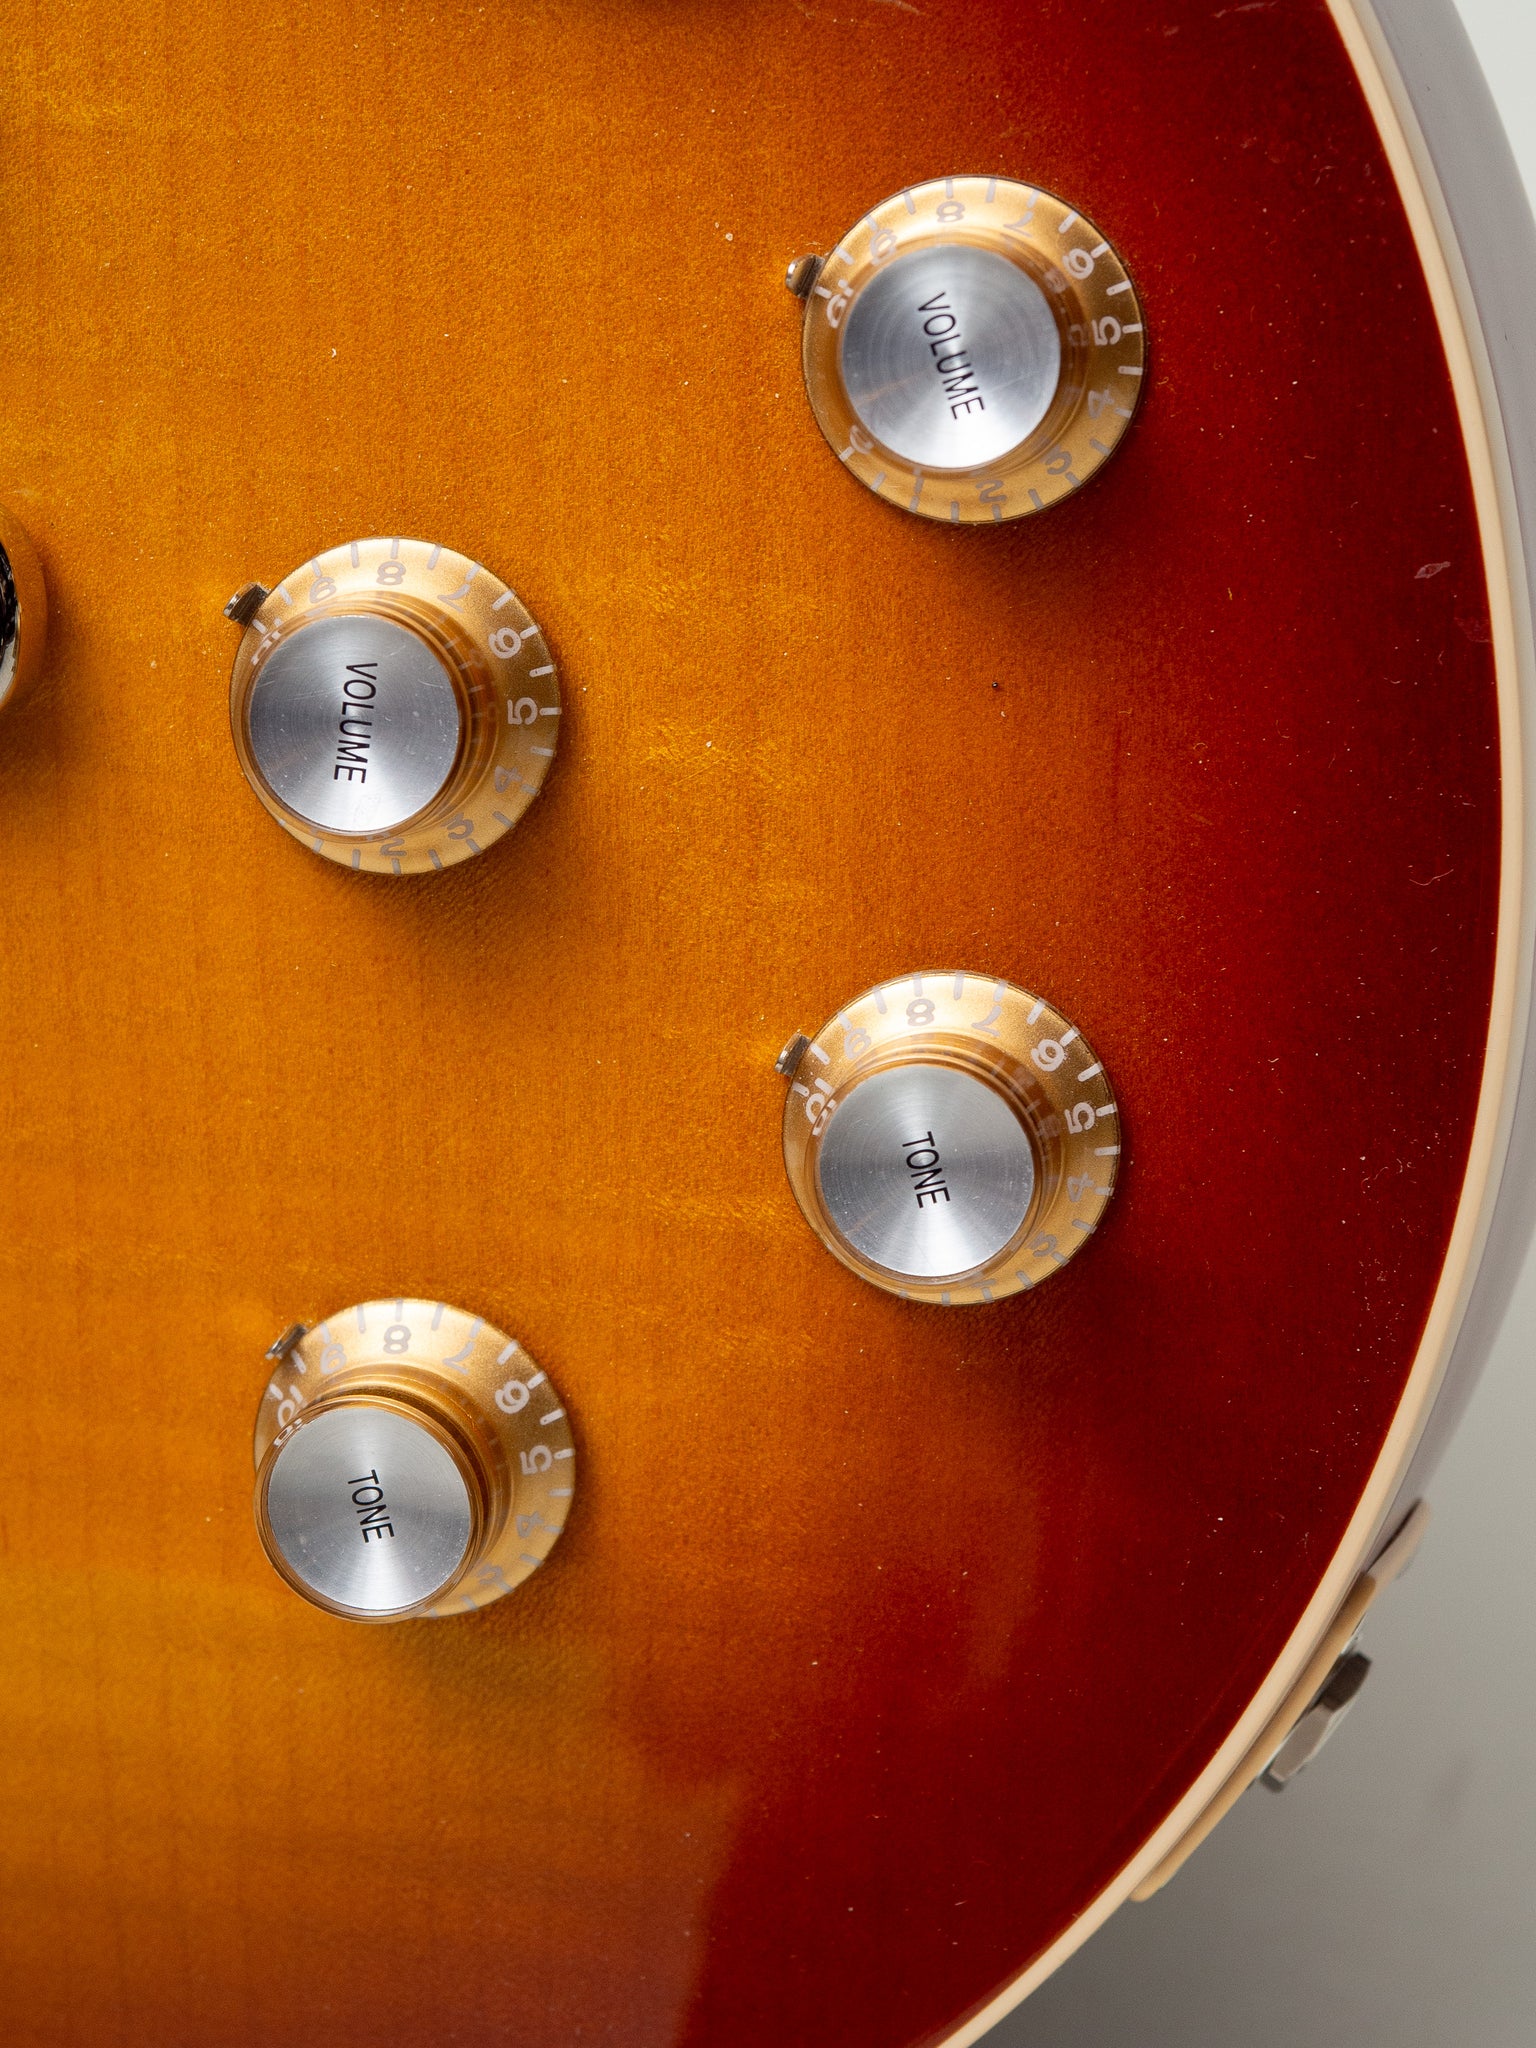 2021 Gibson Les Paul Standard '60s